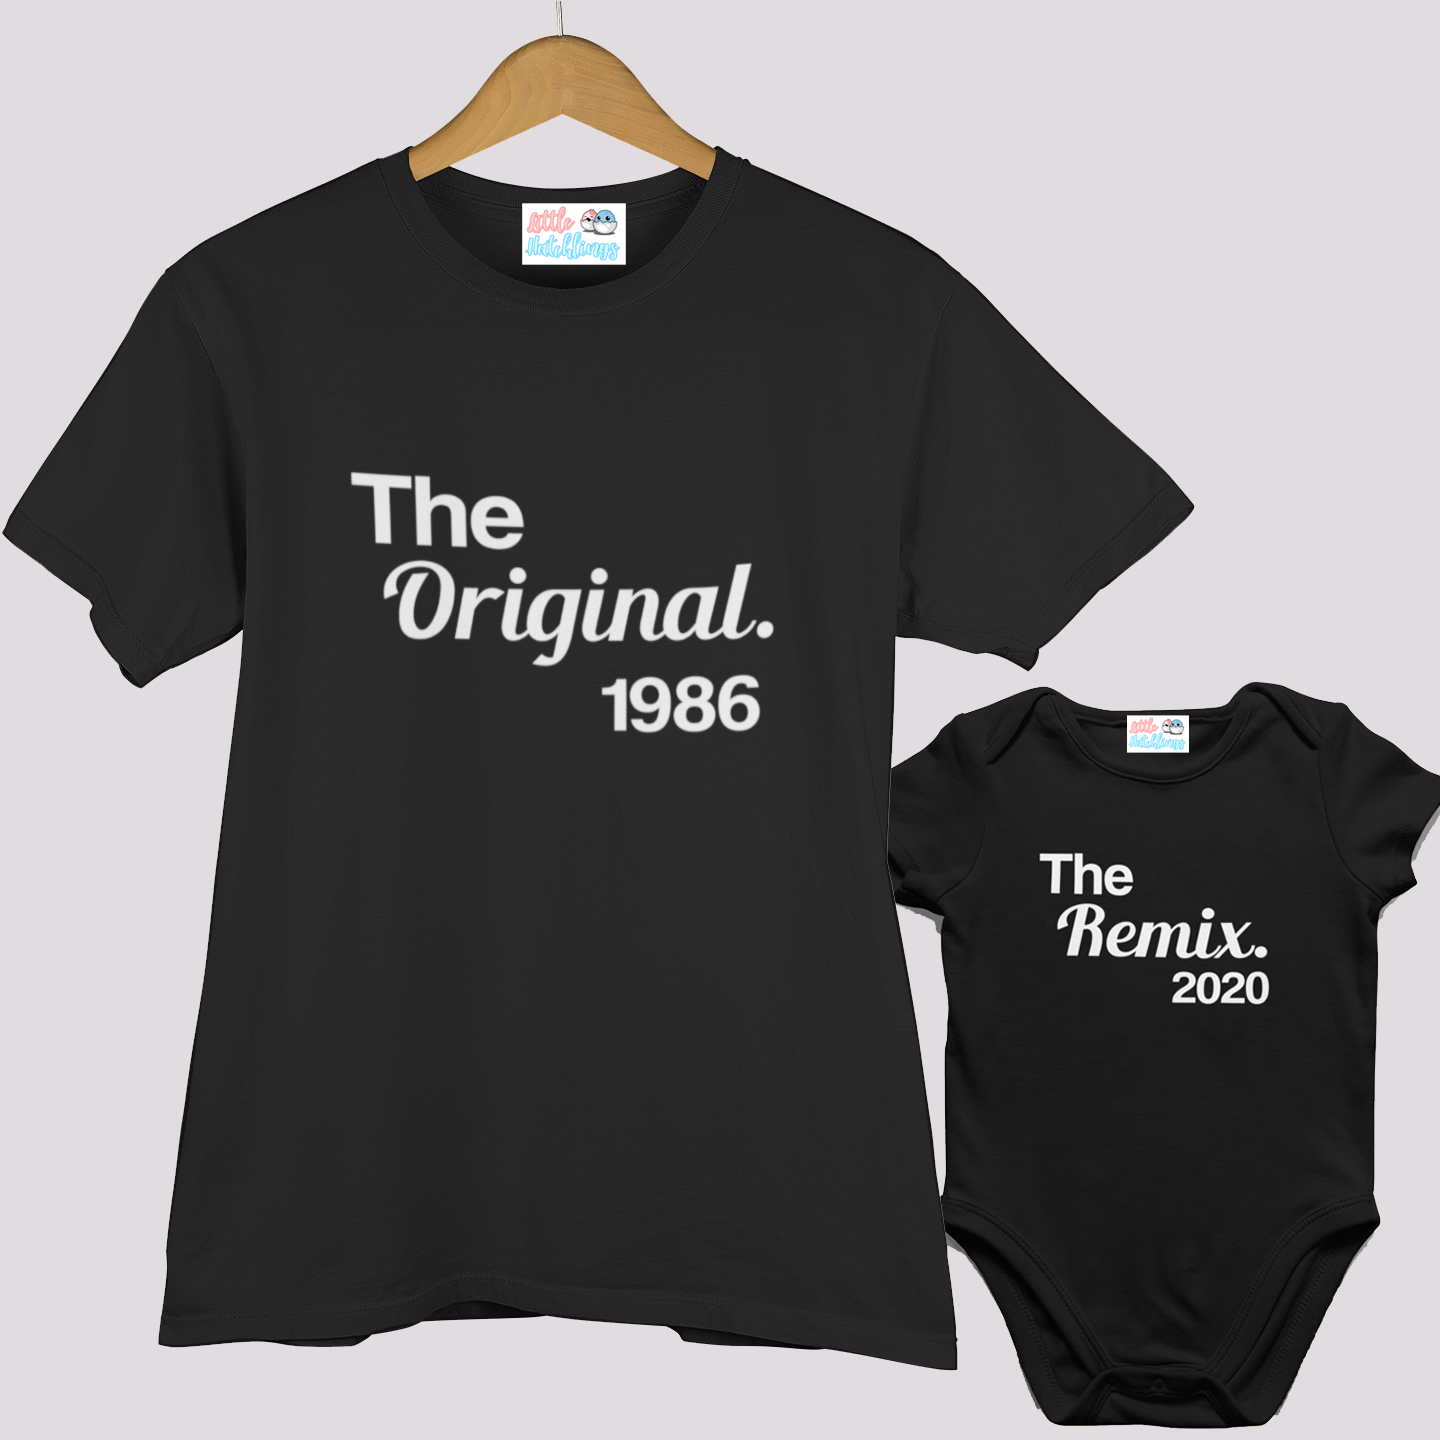 The Original + The Remix Black Combo - Adult Tshirt + Kids Tshirt